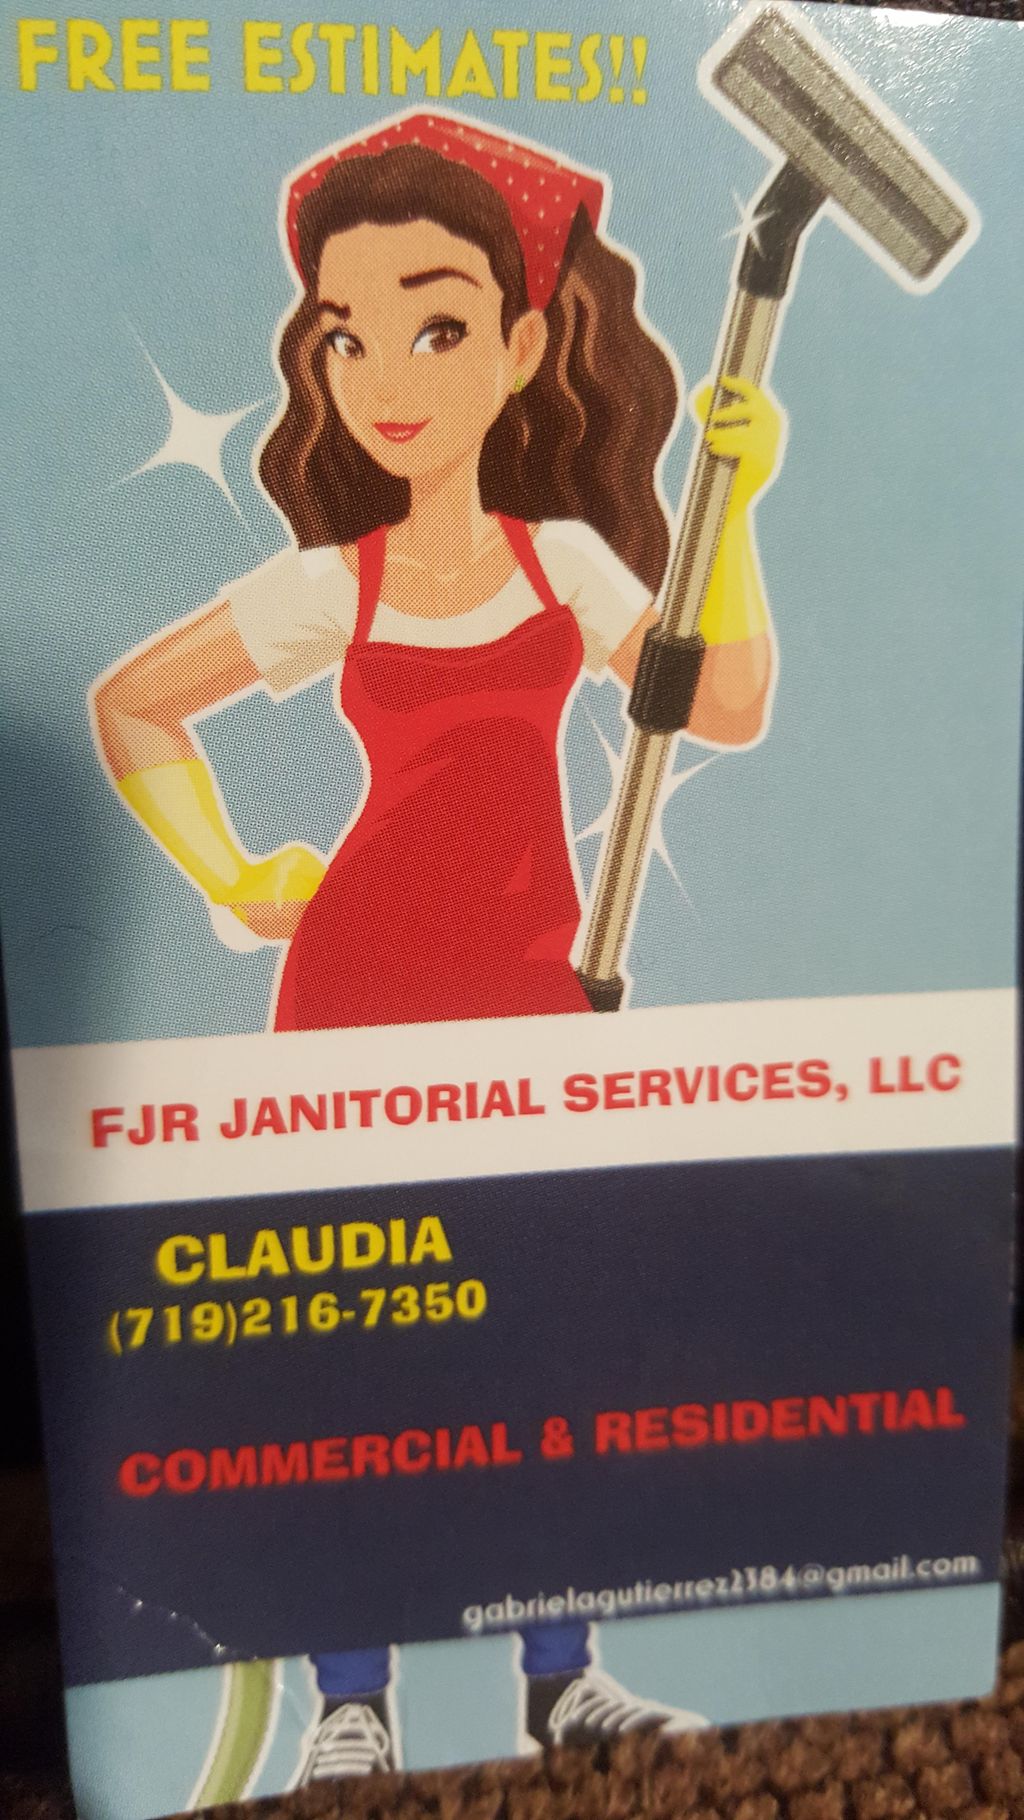 FJR Janitorial Services, LLC